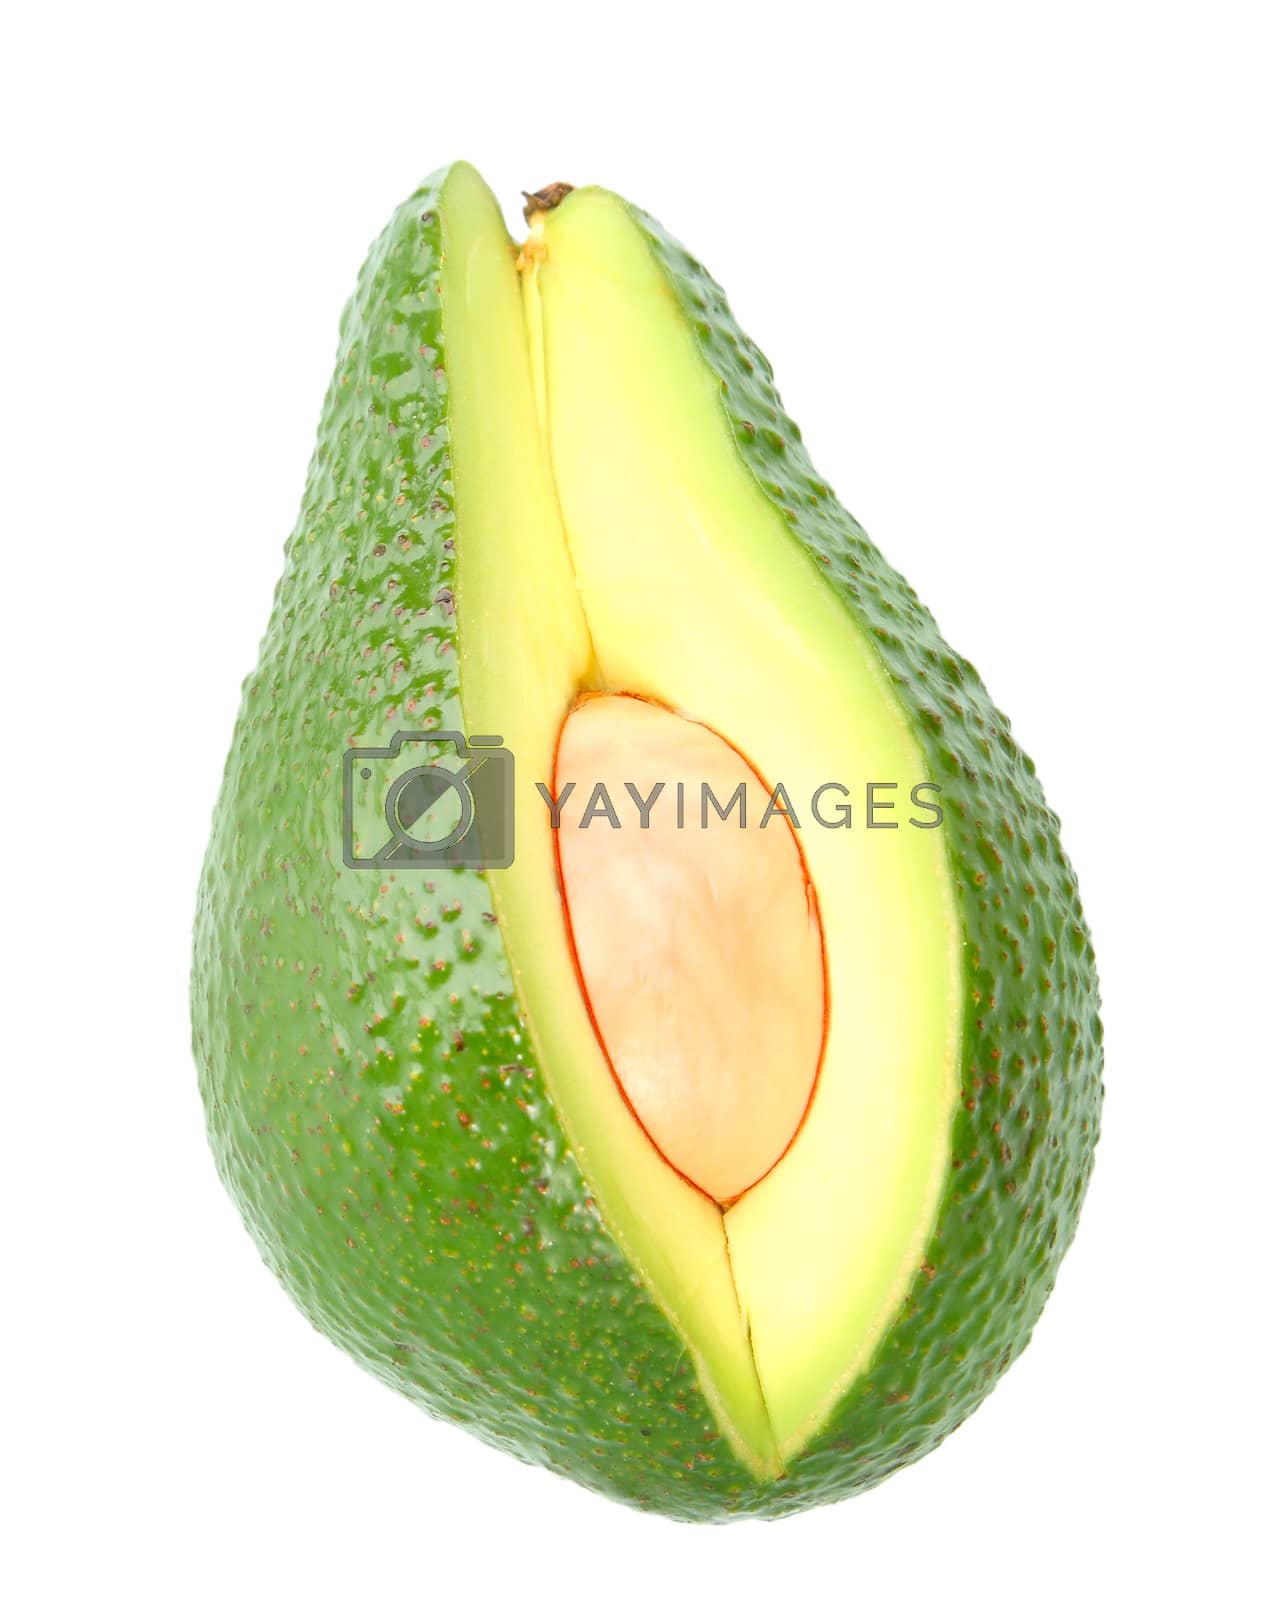 Royalty free image of Single green ripe avocado by boroda